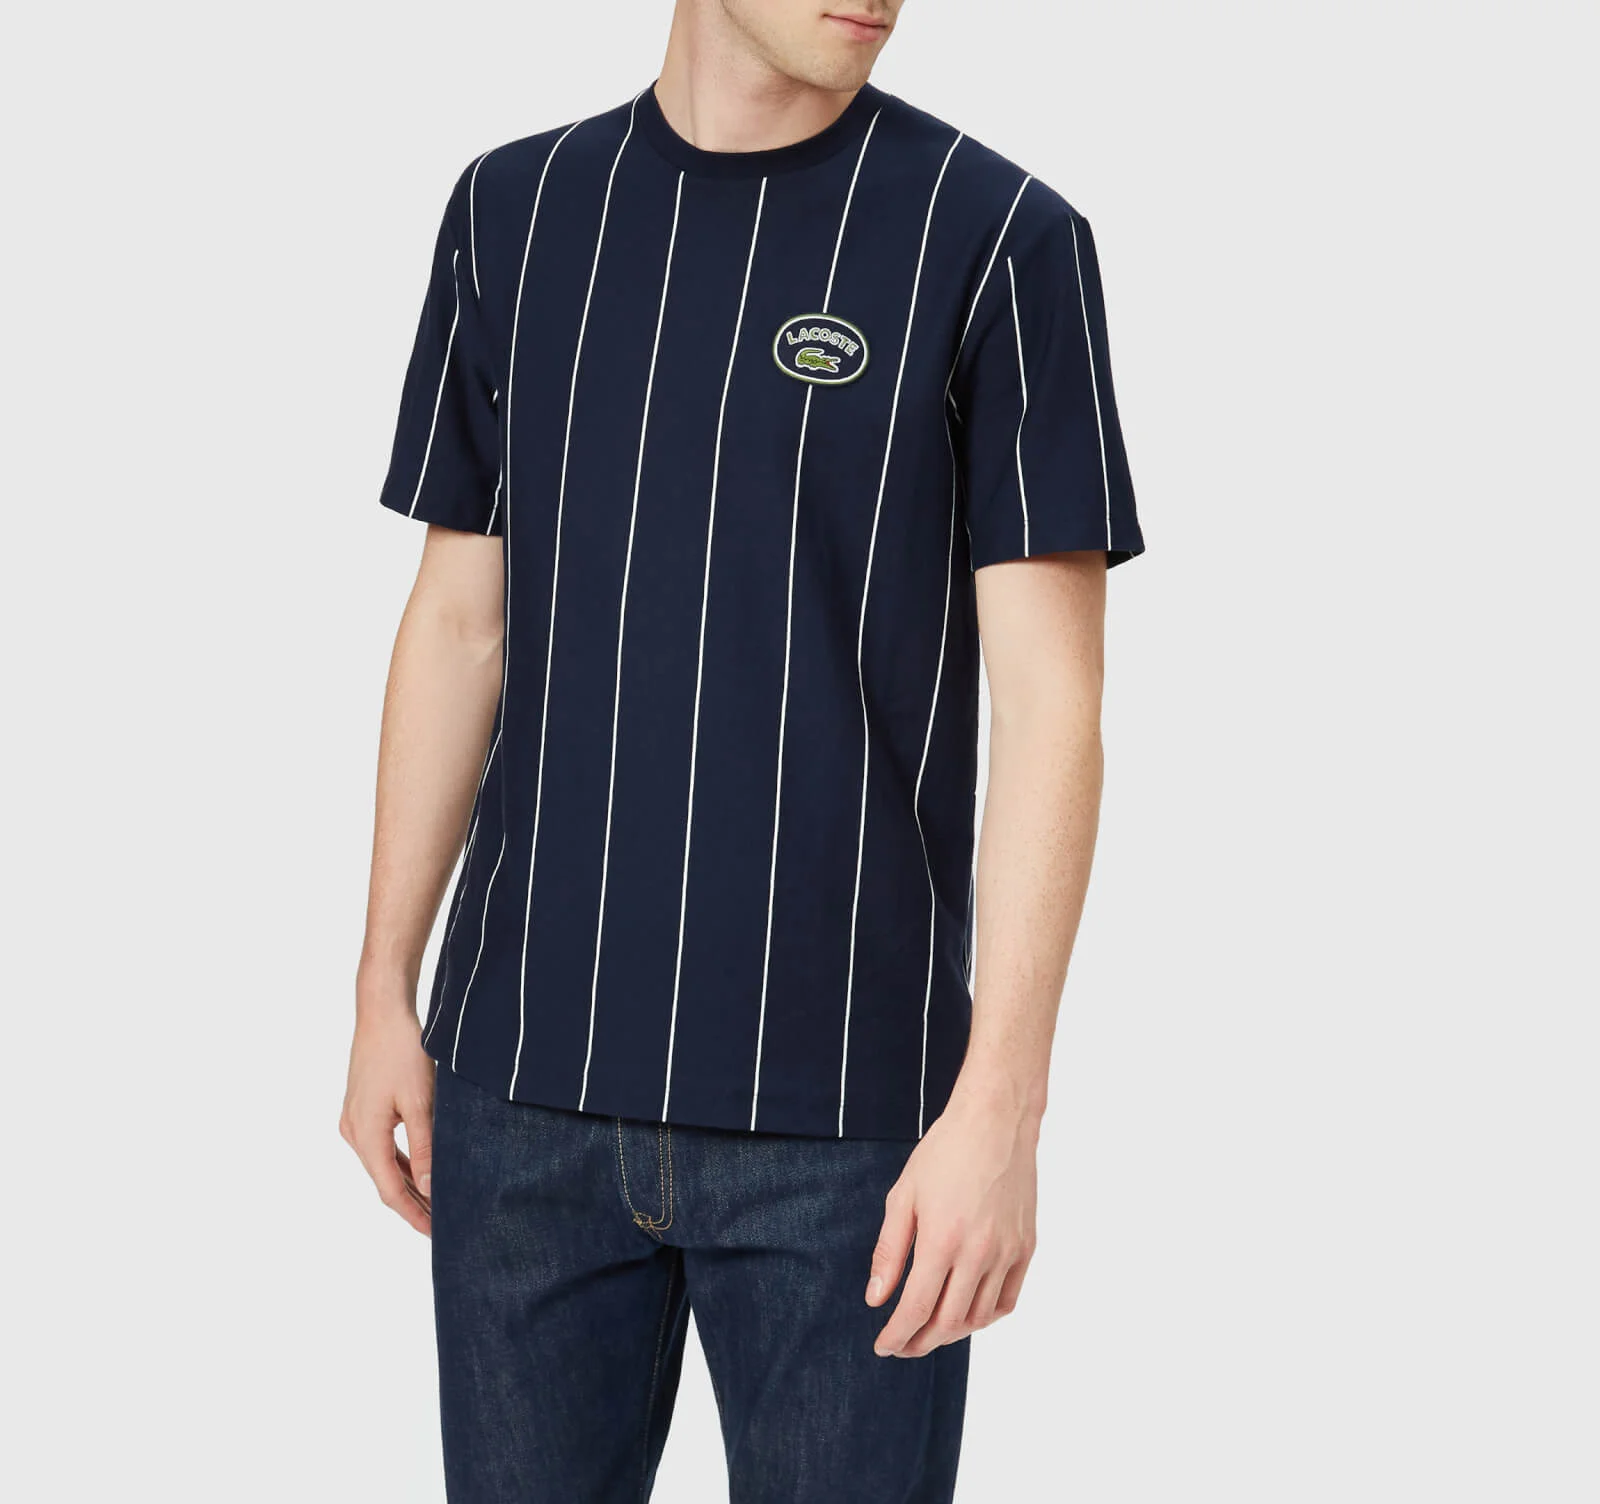 Lacoste Men's Vertical Stripe/Patch Logo T-Shirt - Navy/White Image 1